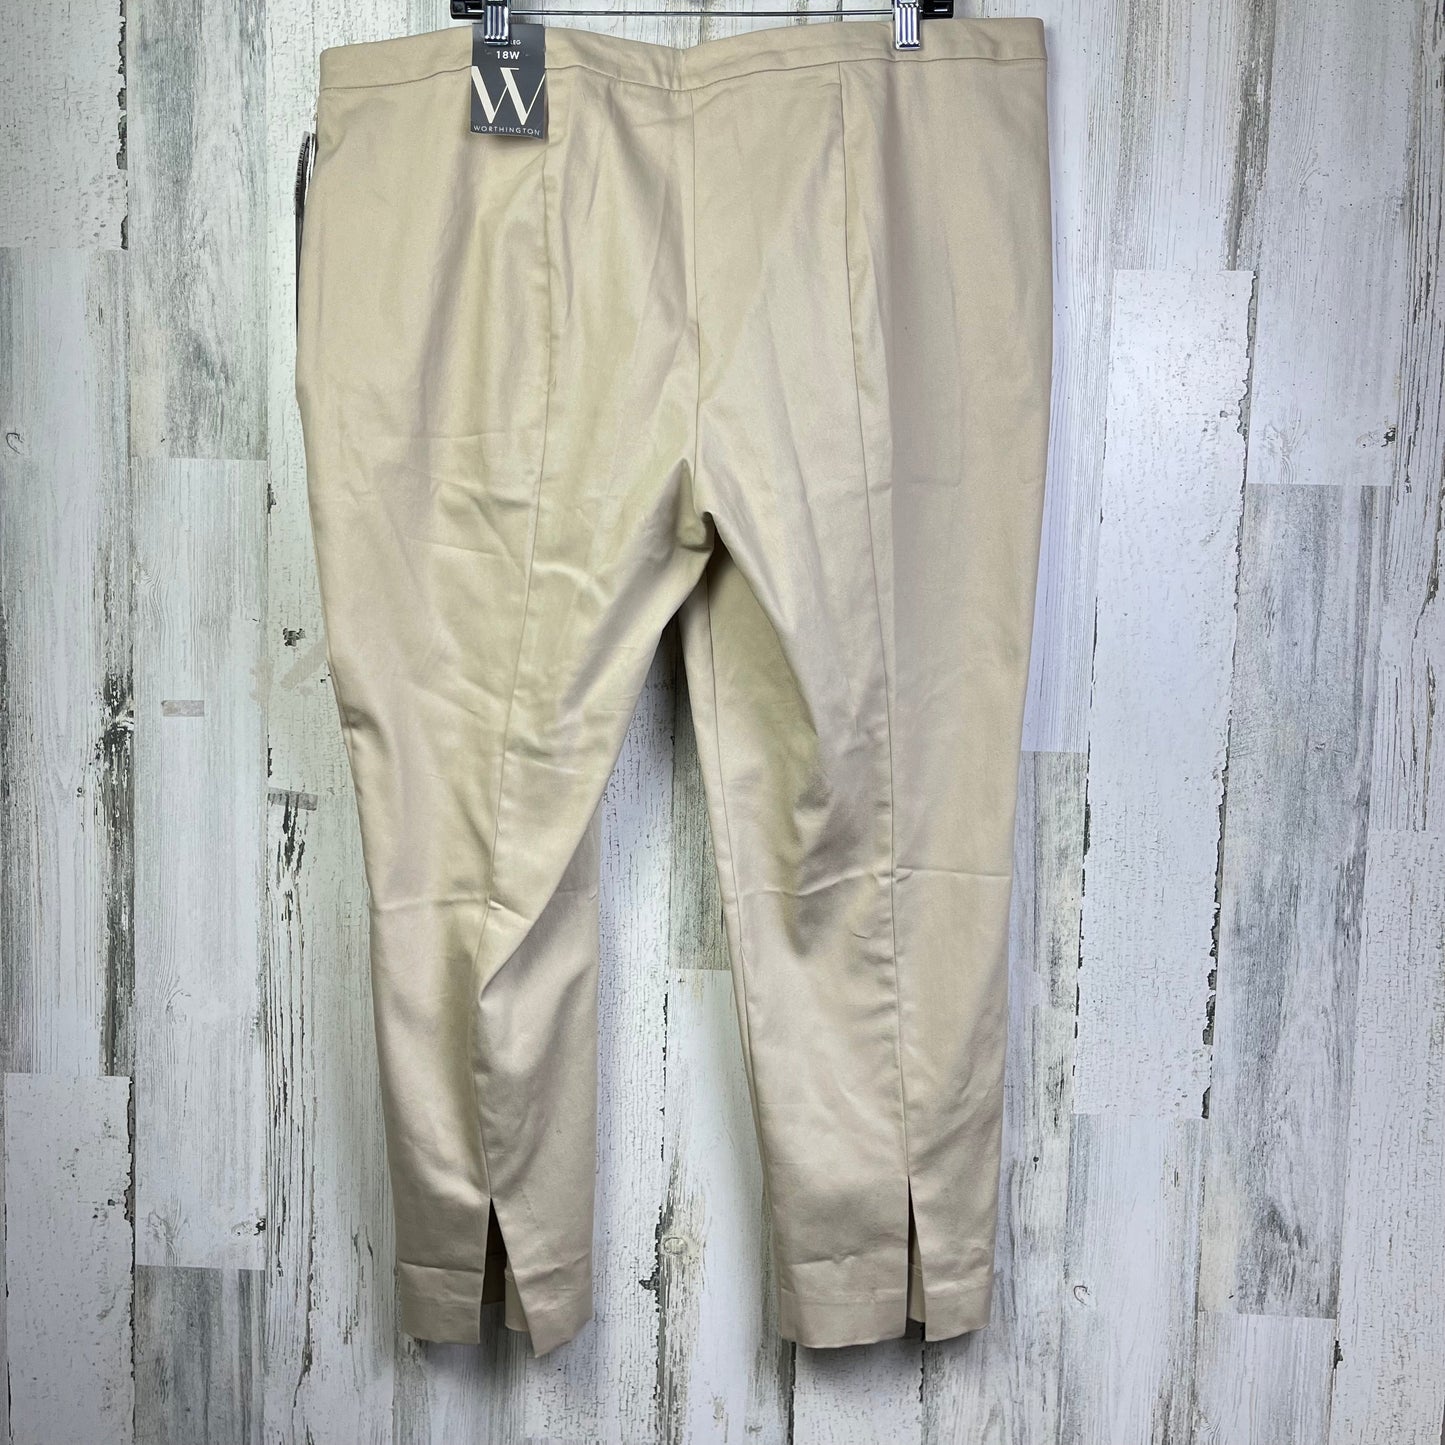 Pants Work/dress By Worthington  Size: 18